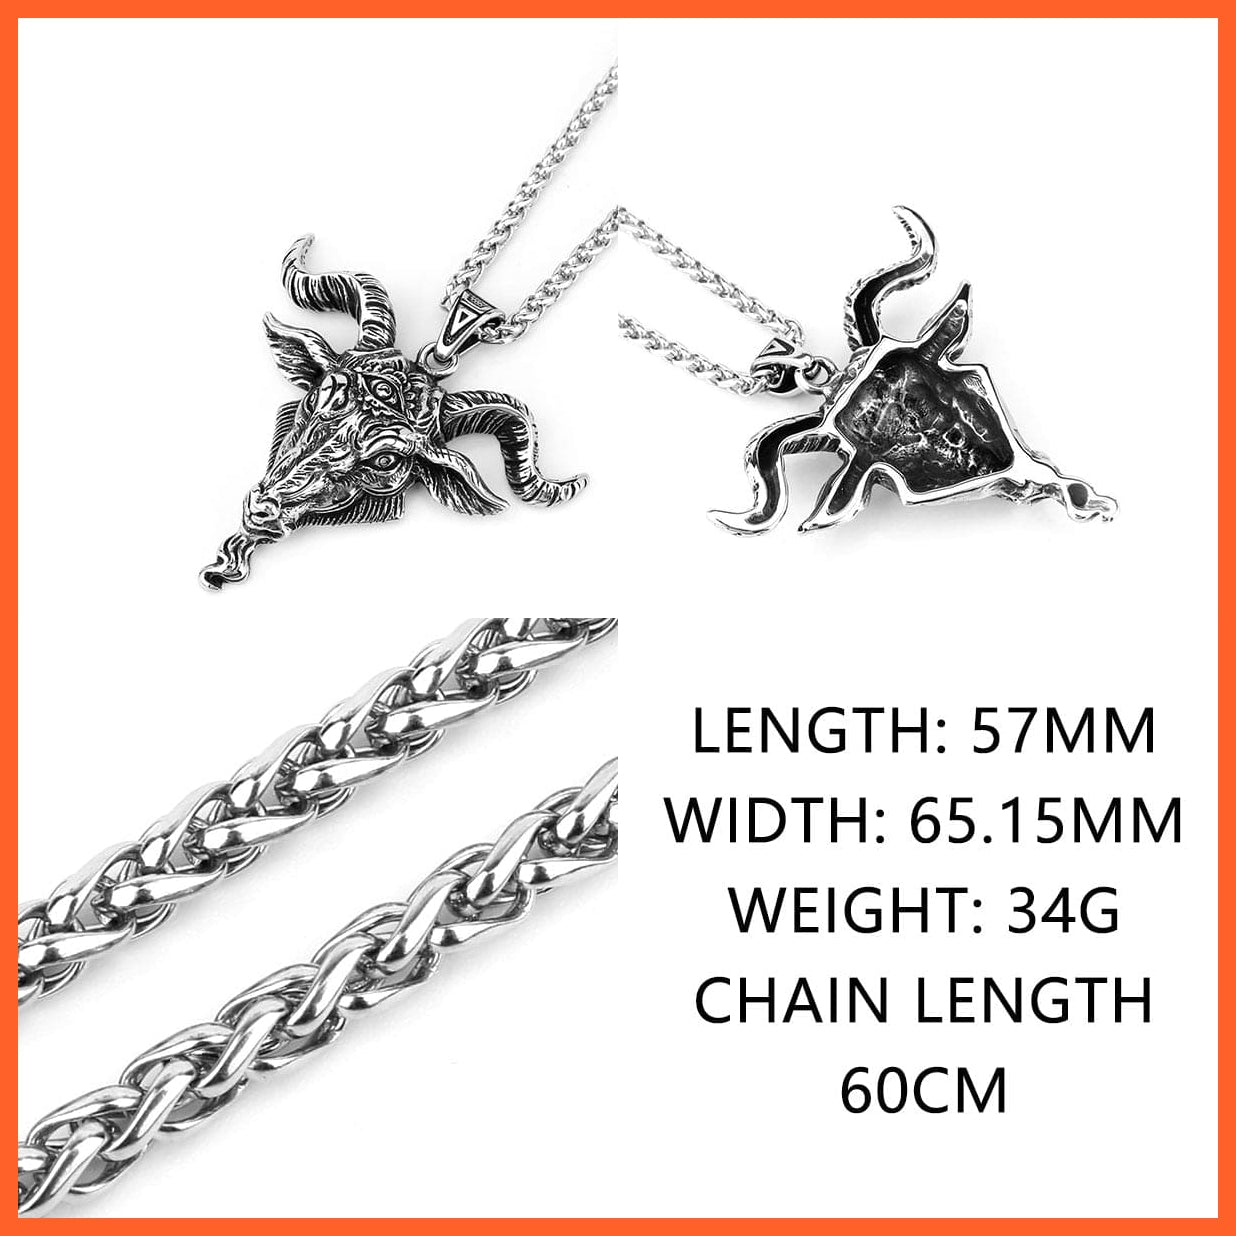 whatagift.uk Stainless Steel Lucifer Satan Ram Charm Pendant Necklace